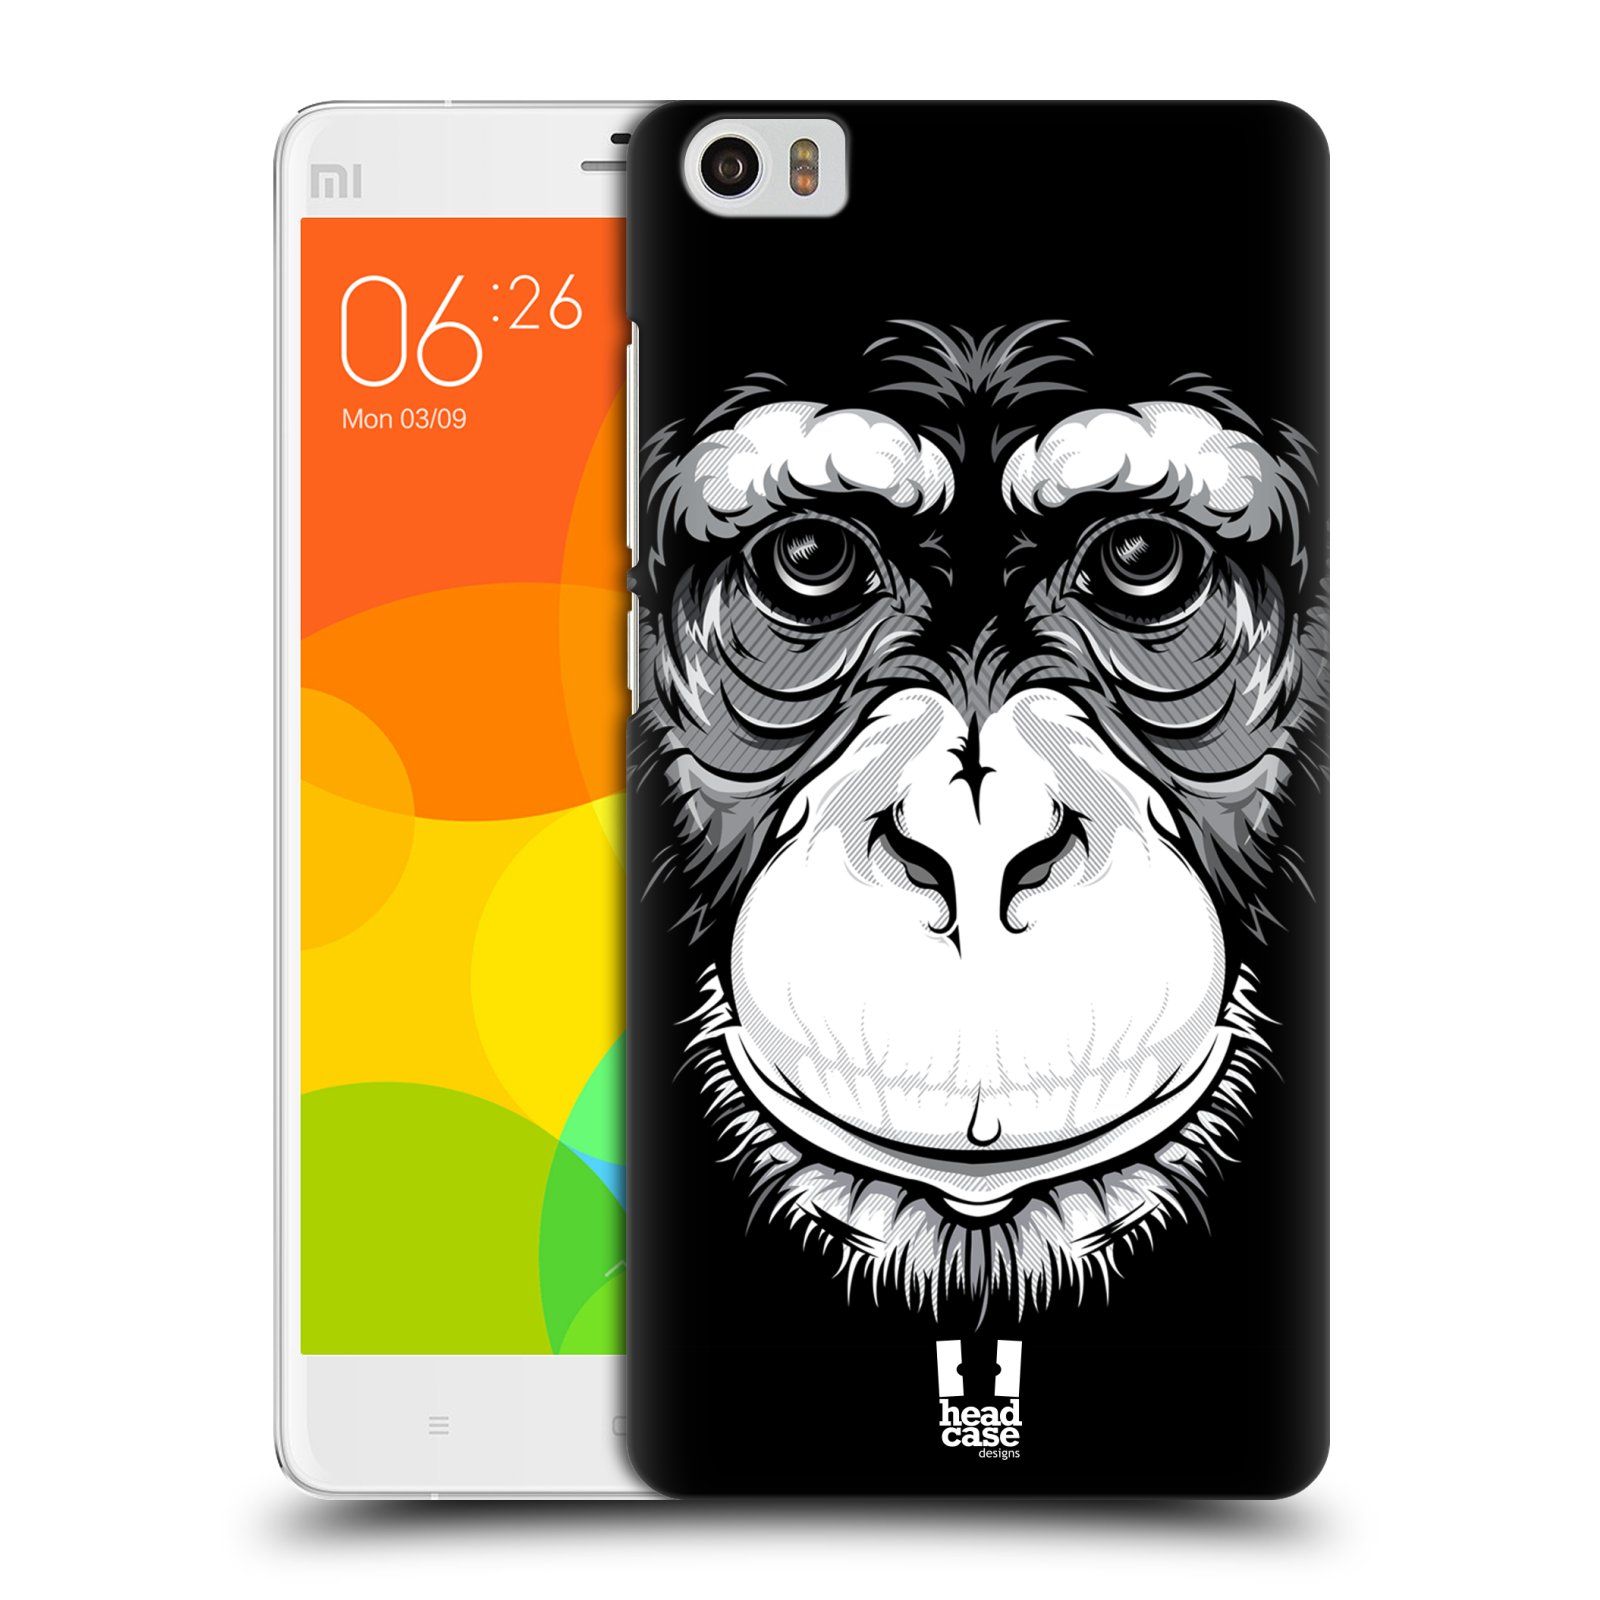 HEAD CASE pevný plastový obal na mobil XIAOMI Mi Note vzor Zvíře kreslená tvář šimpanz